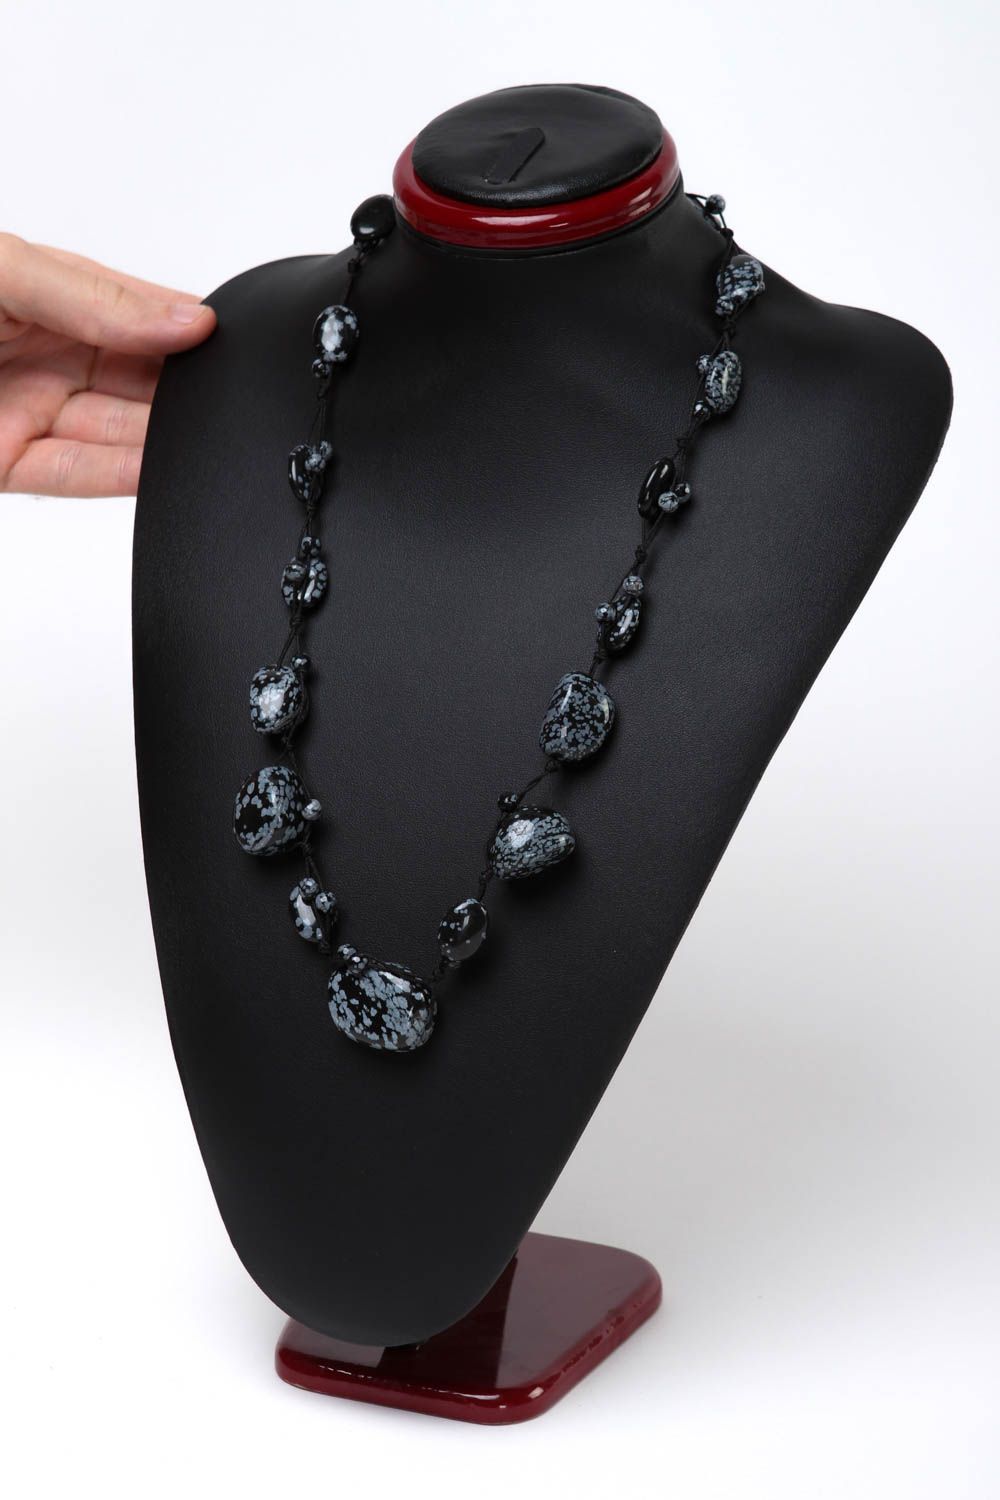 Handmade necklace unusual accessory designer jewelry gift ideas neck accessory photo 5